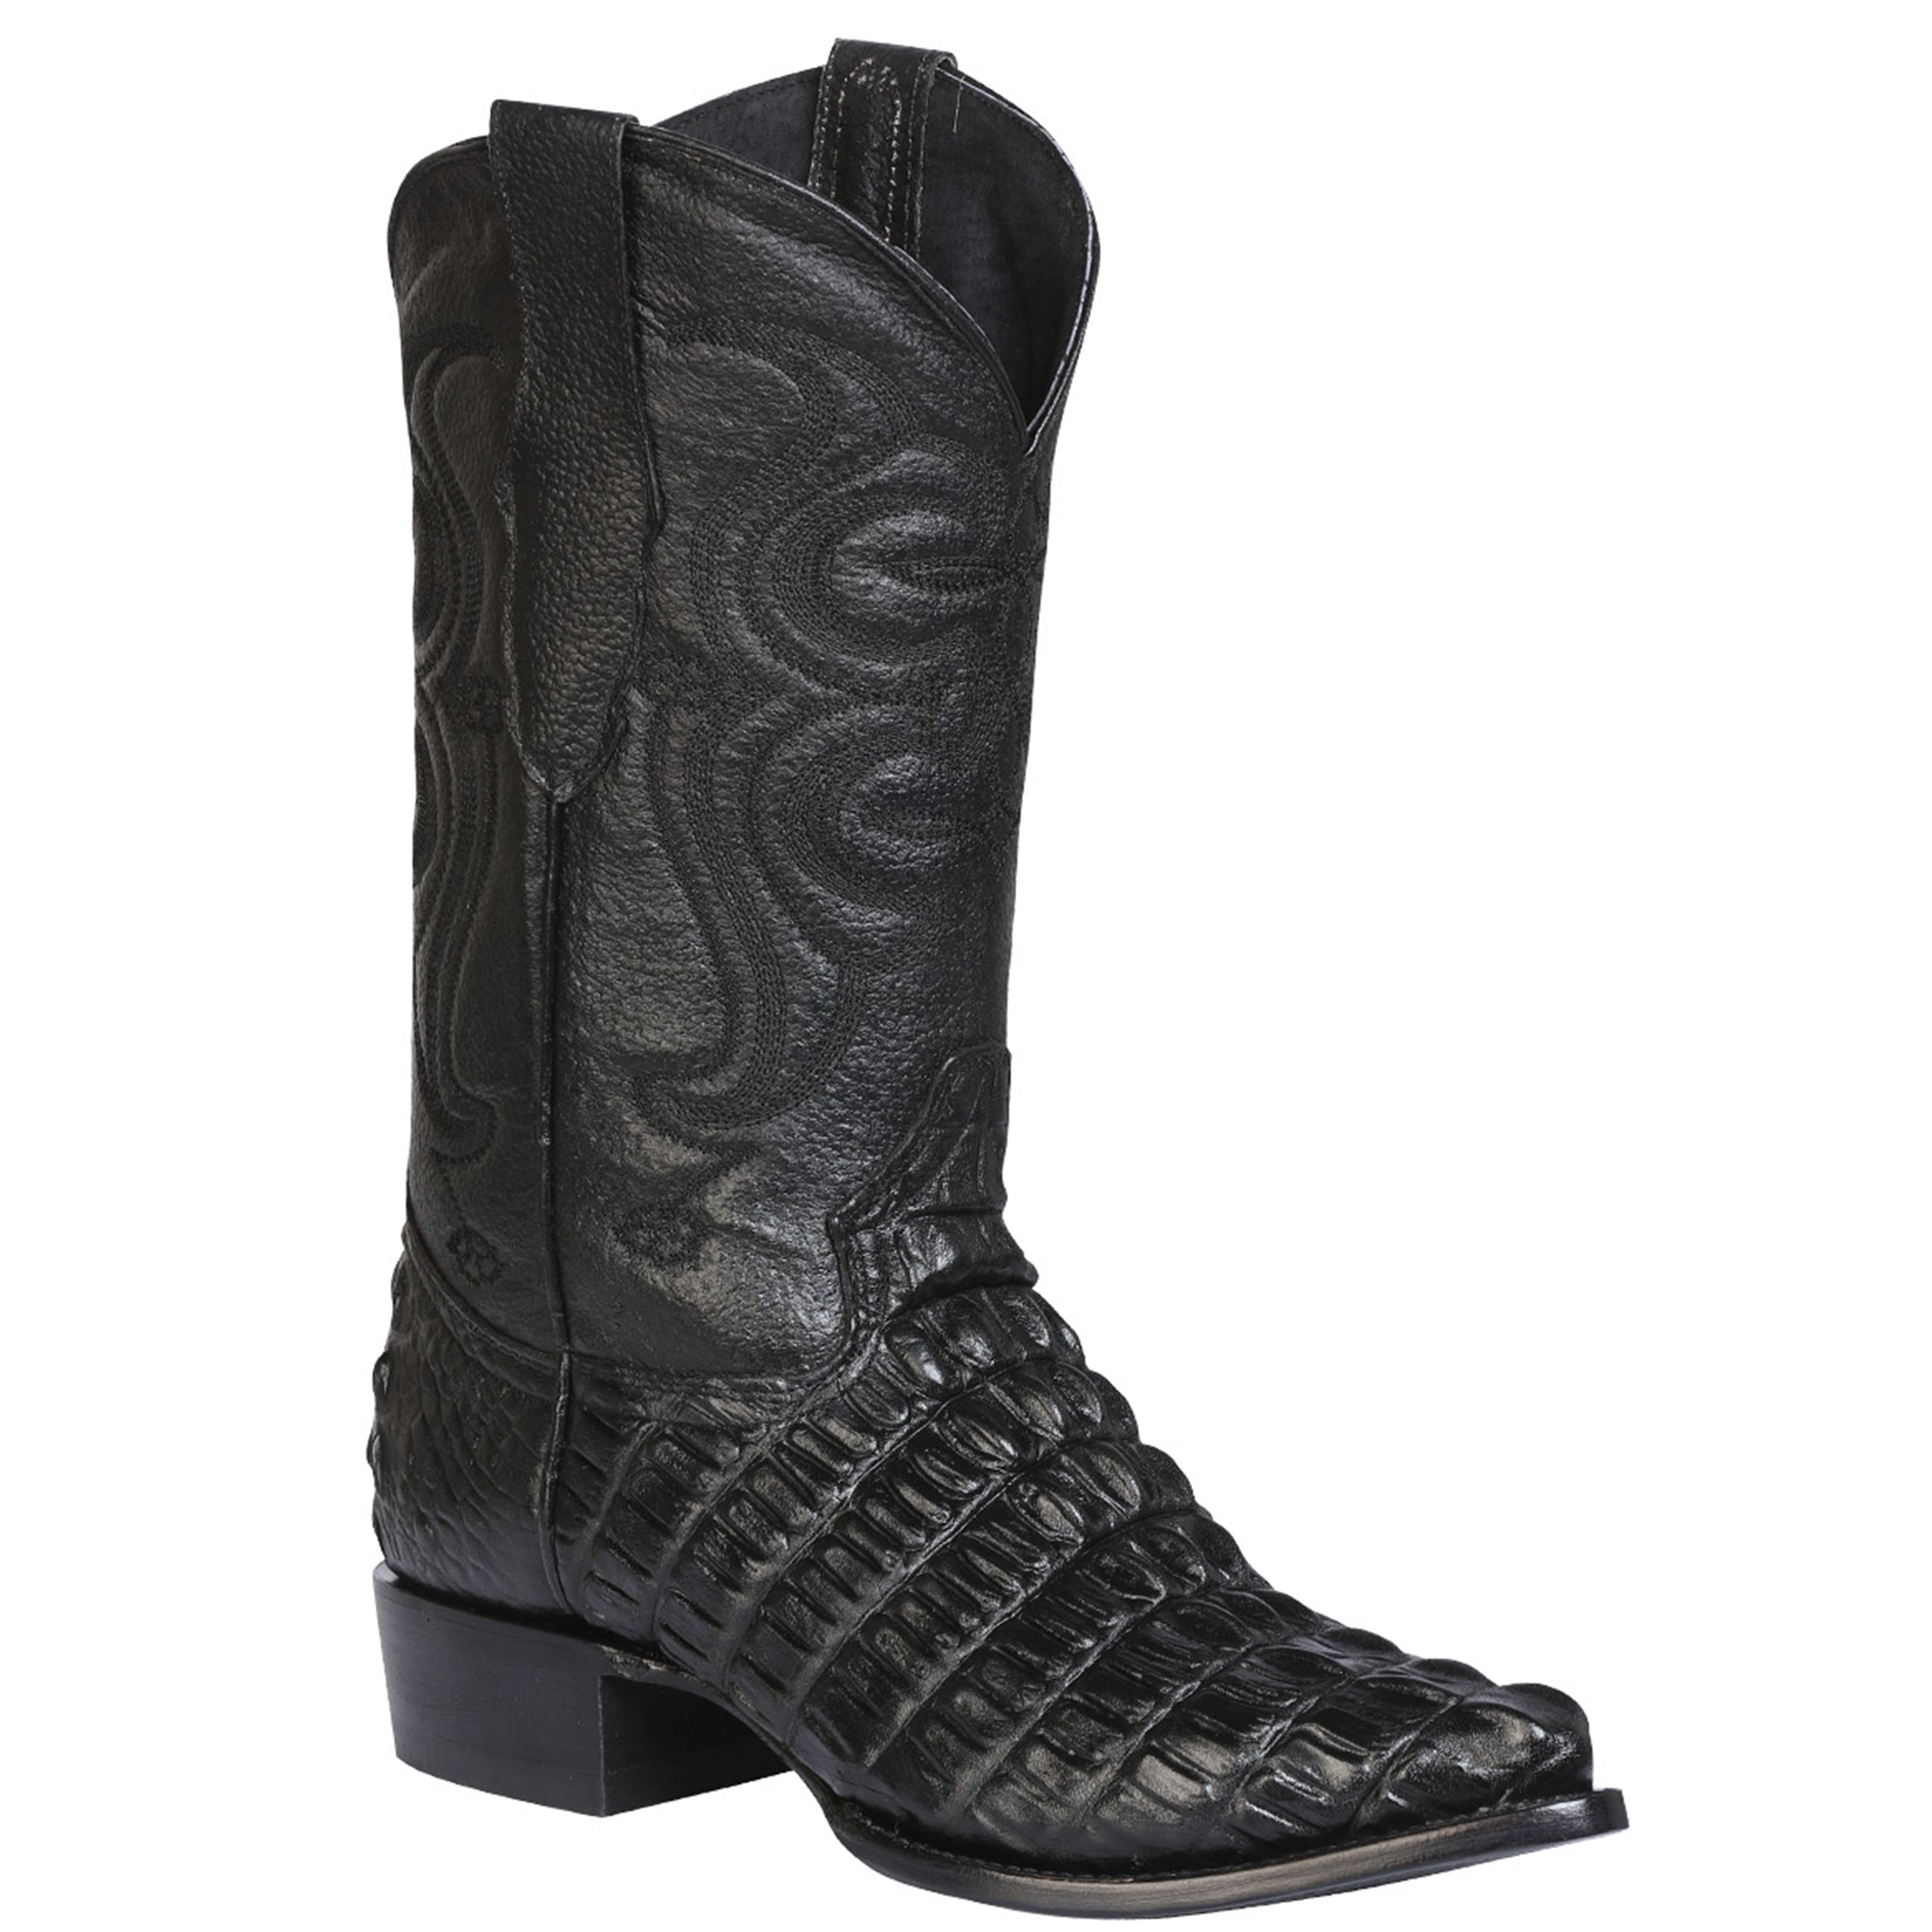 Black Crocodile Print Boots Pointed Toe - El General